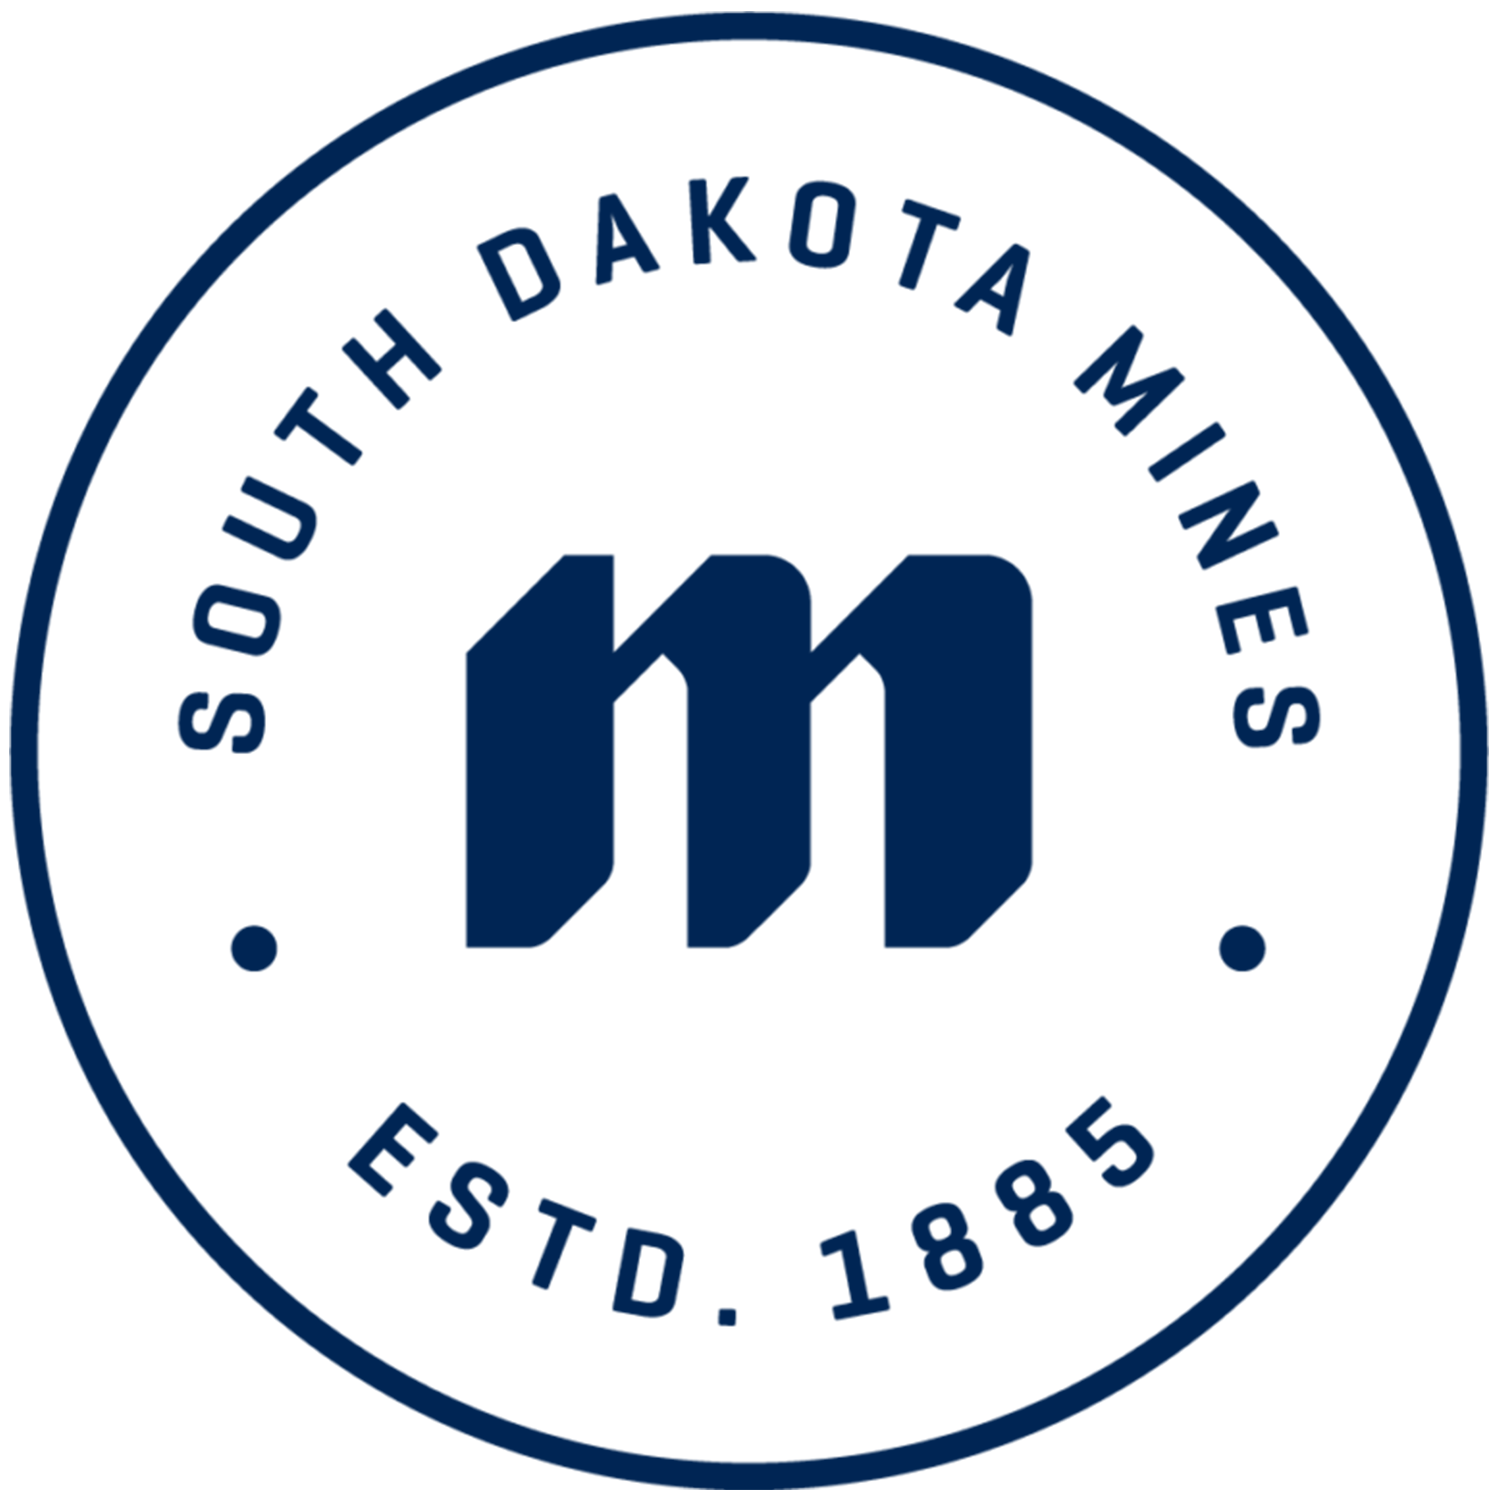 south dakota school of mines and technology